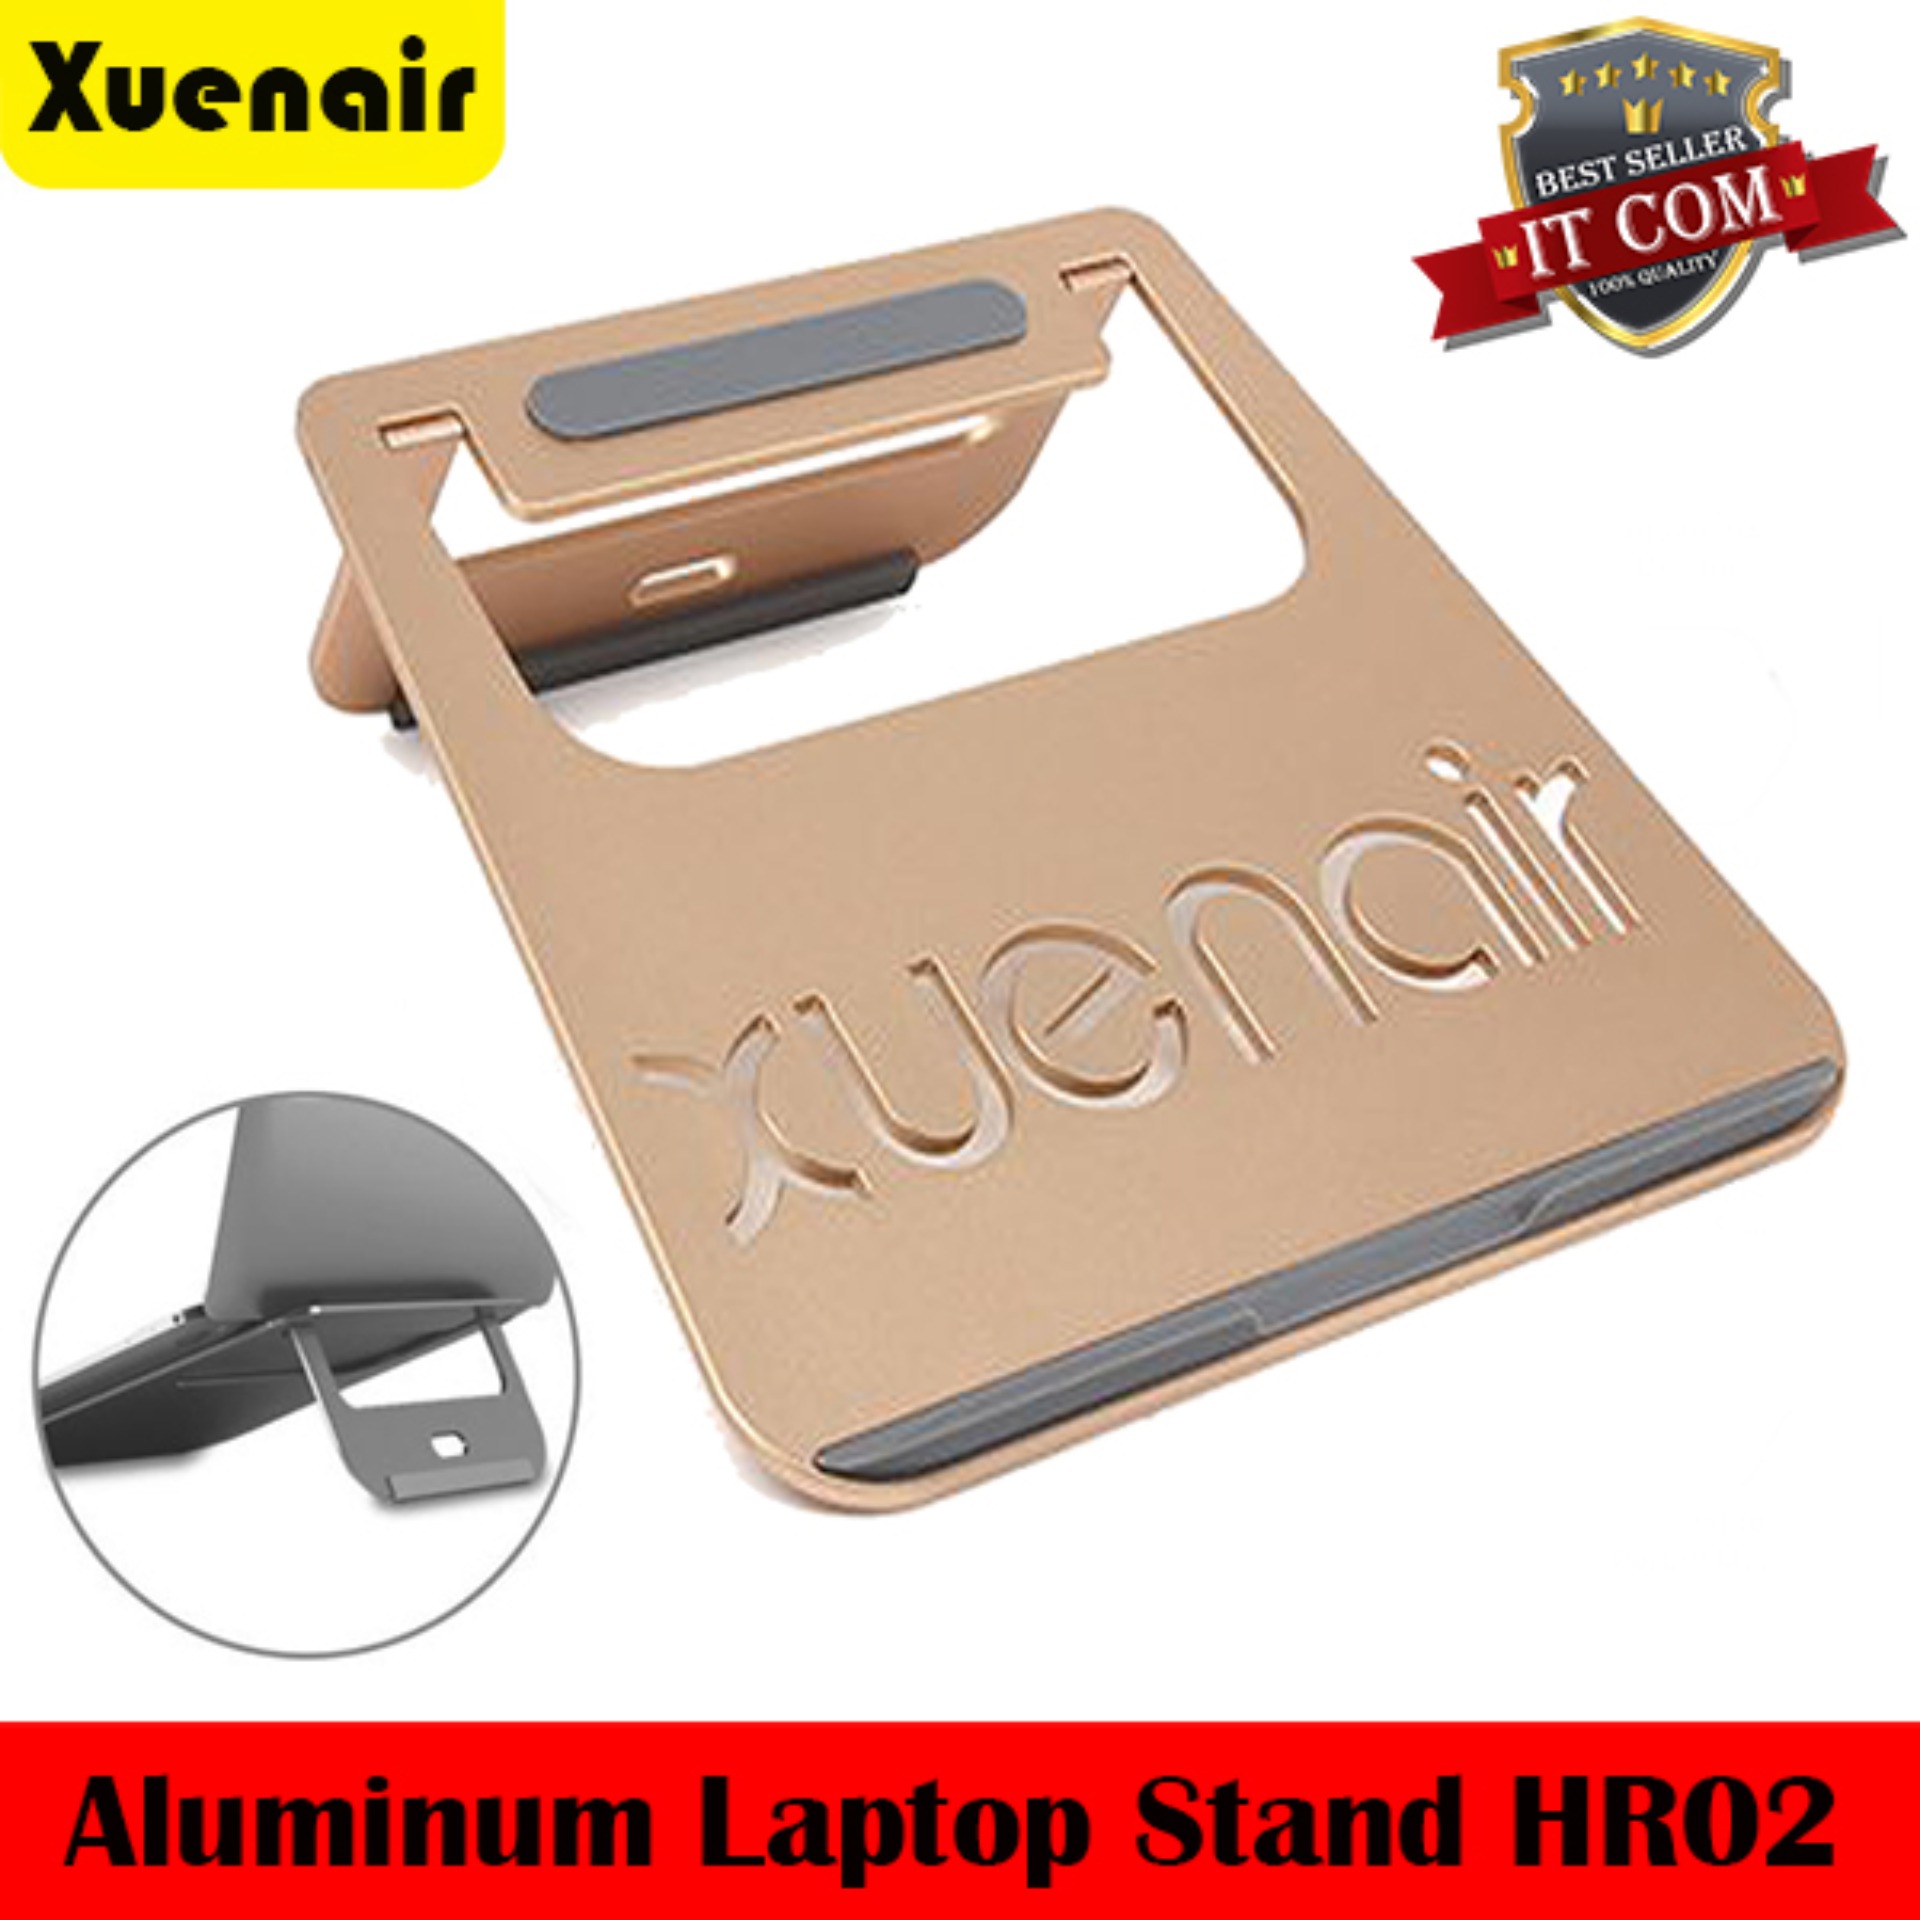 Xuenair HR02 Aluminum Laptop Stand ที่วางสำหรับโน๊ตบุ๊ค